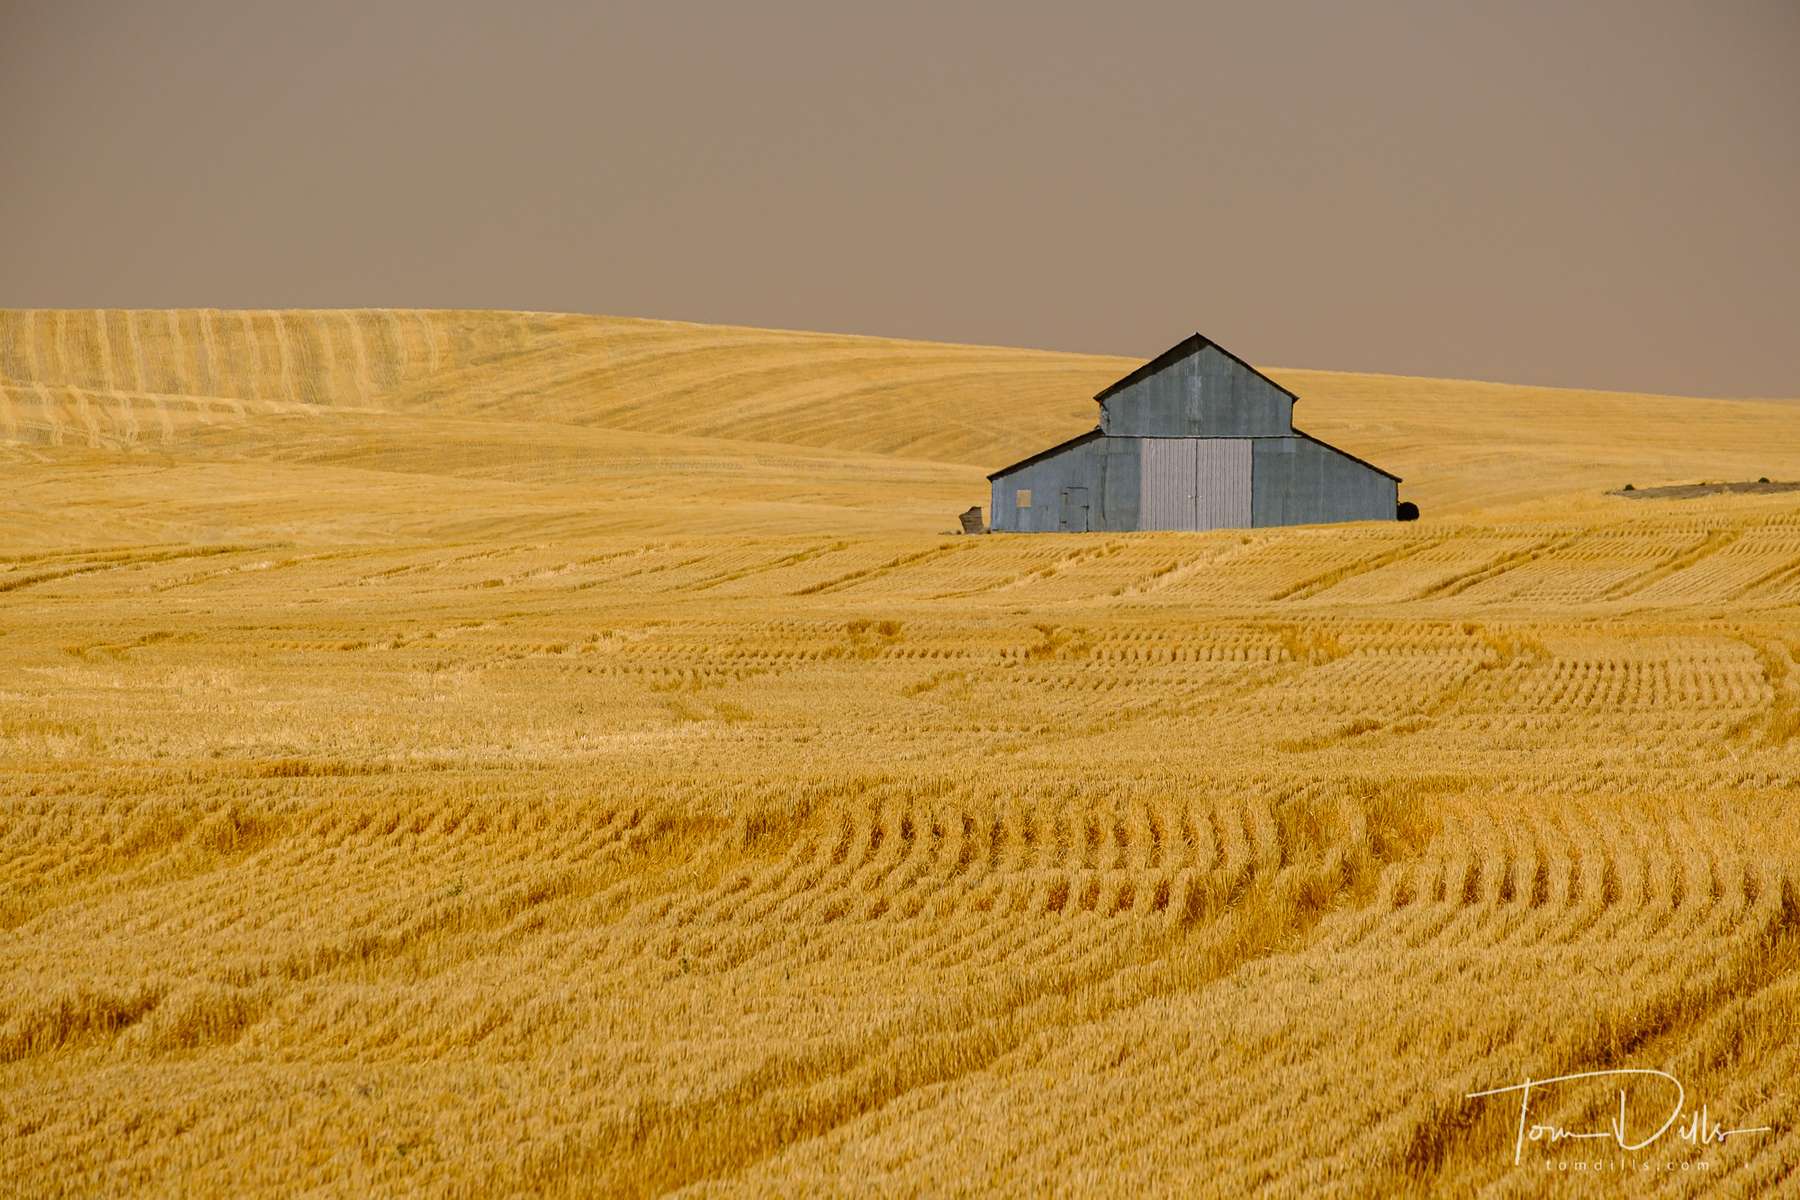 Rural countryside along SR 26 in southeastern Washington